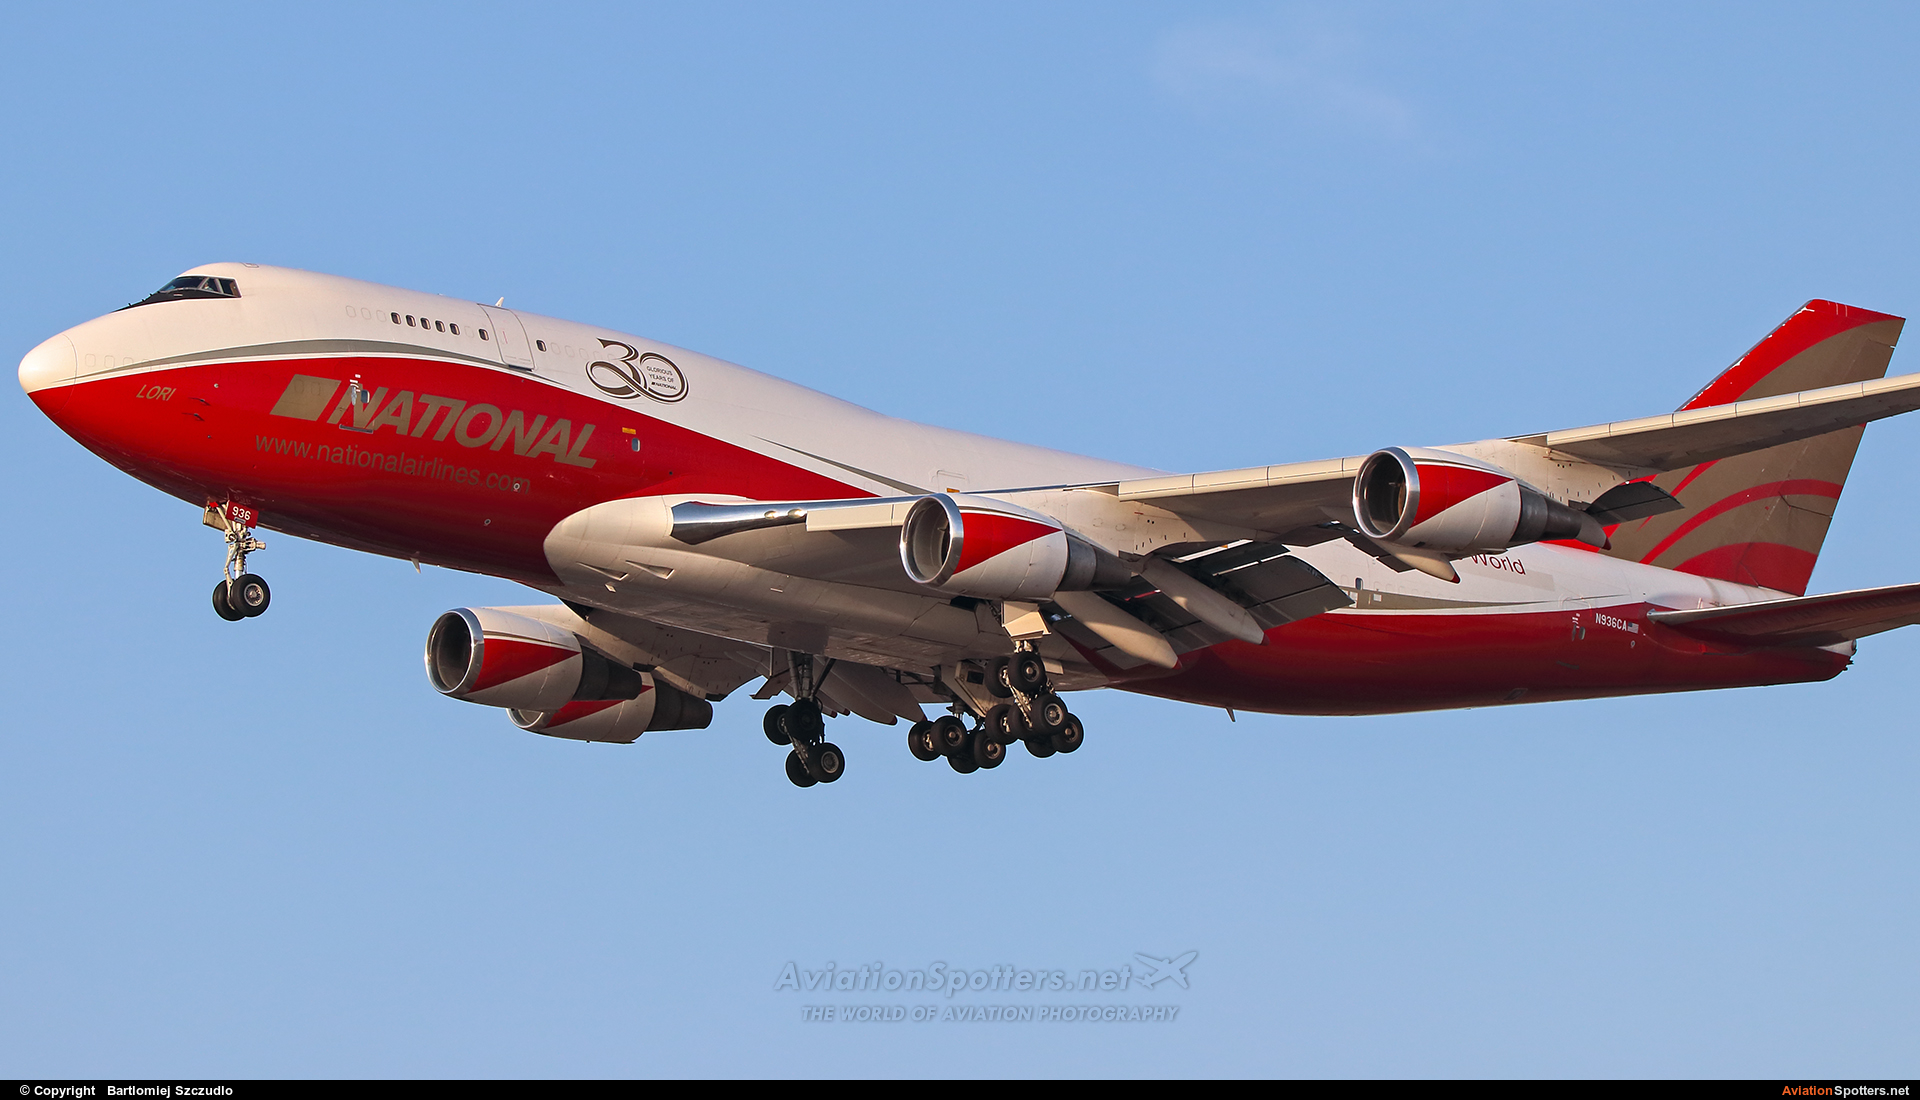 National Airlines  -  747-400BCF  (N936CA) By Bartlomiej Szczudlo  (BartekSzczudlo)